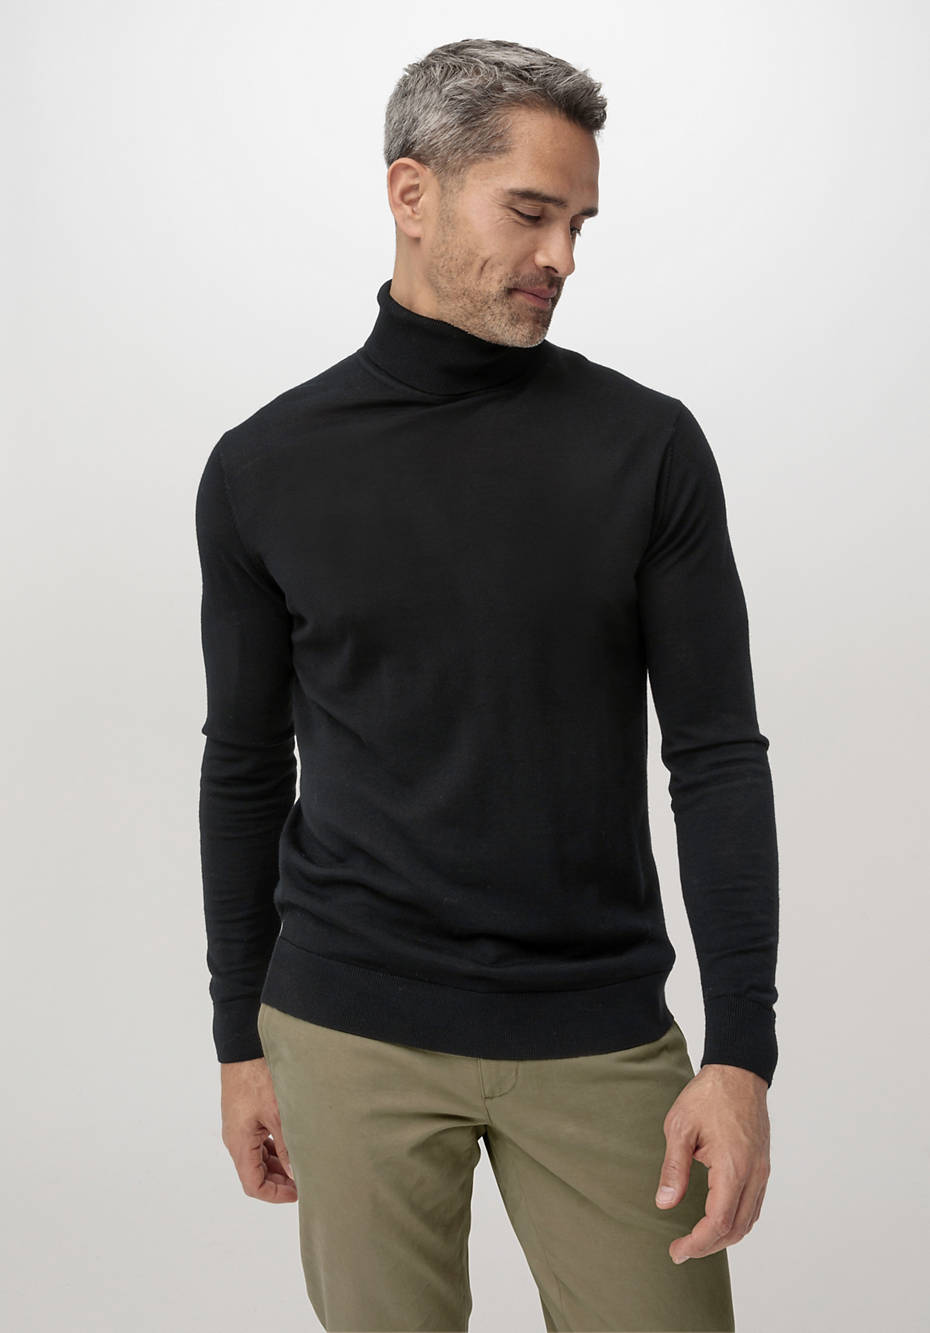 Turtleneck sweater made from pure organic merino wool